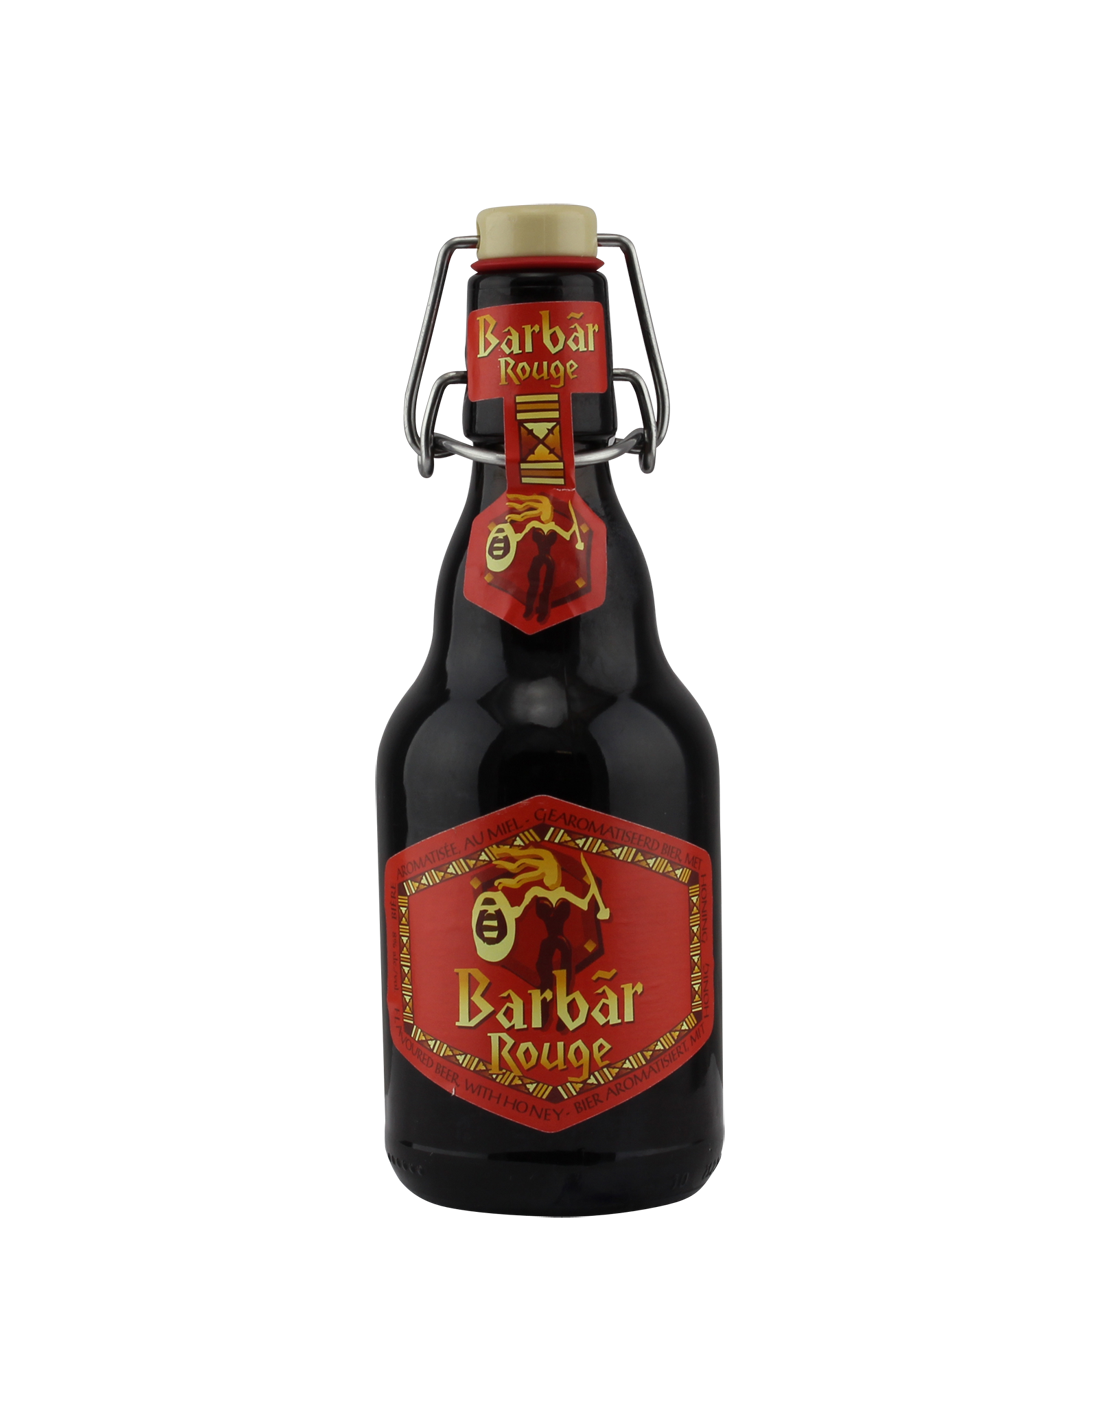 Bere bruna Barbar Rouge, 8% alc., 0.33L, Belgia alcooldiscount.ro